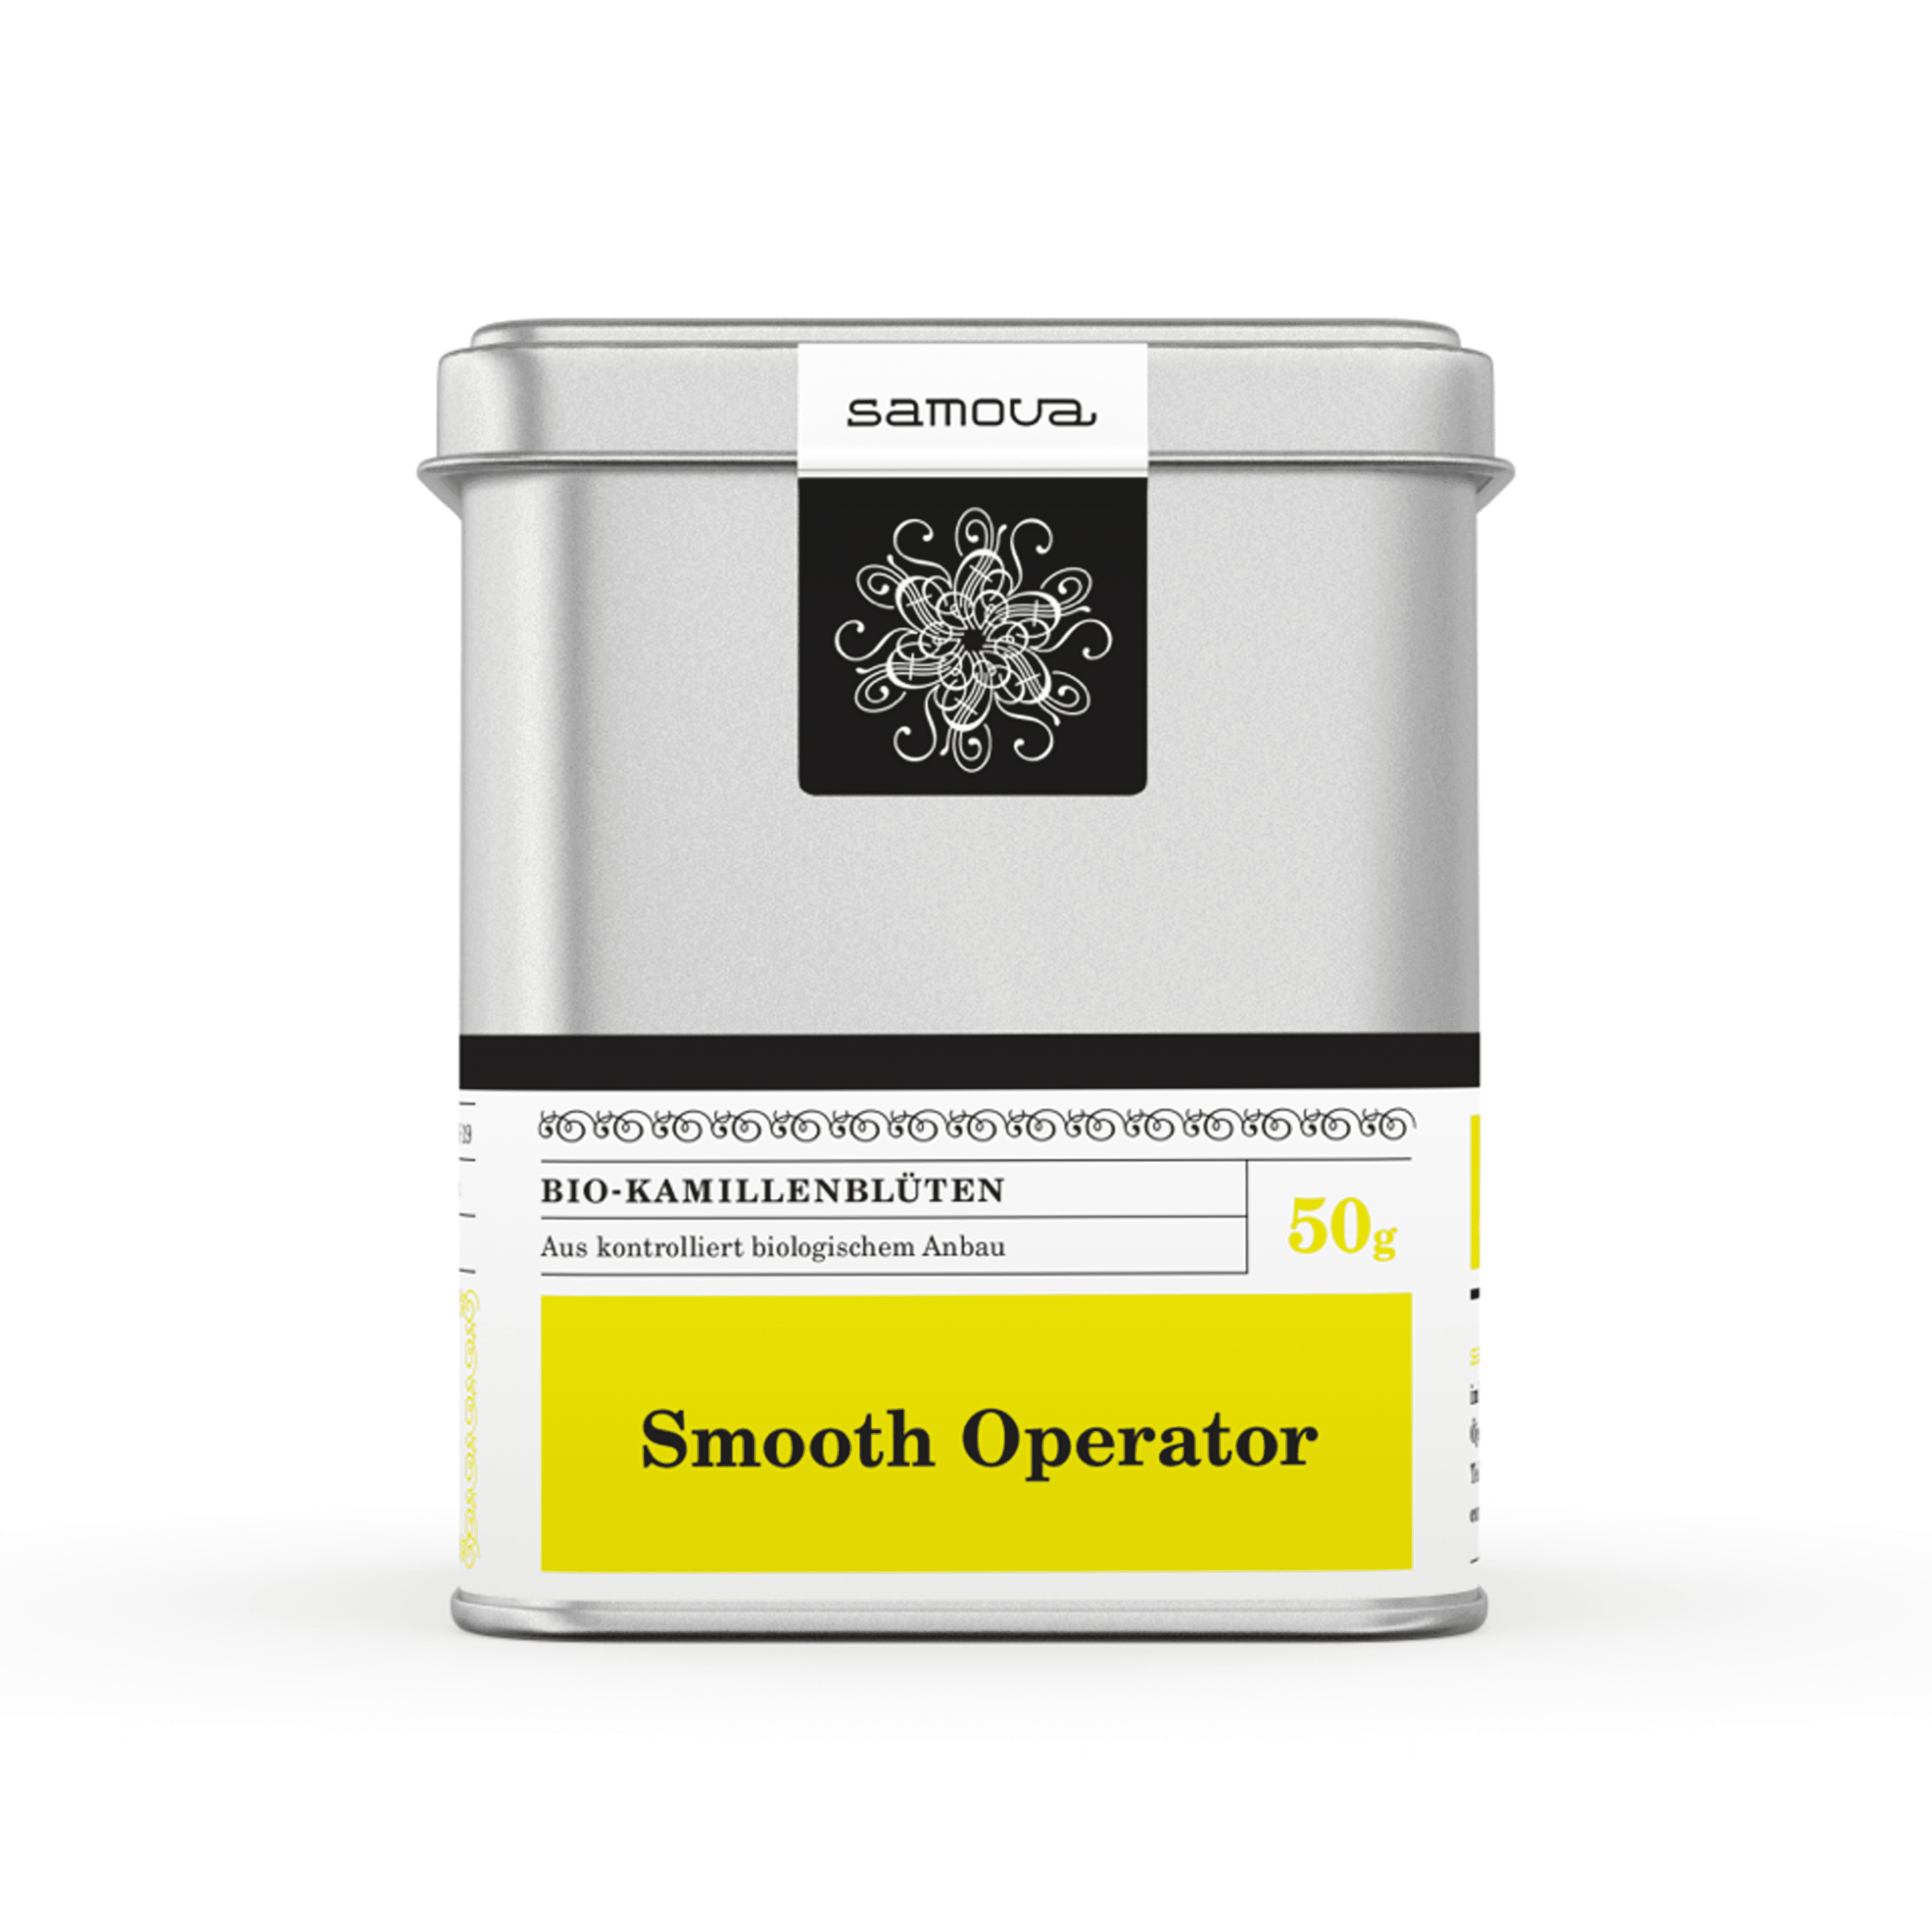 Dose der Teesorte Smooth Operator